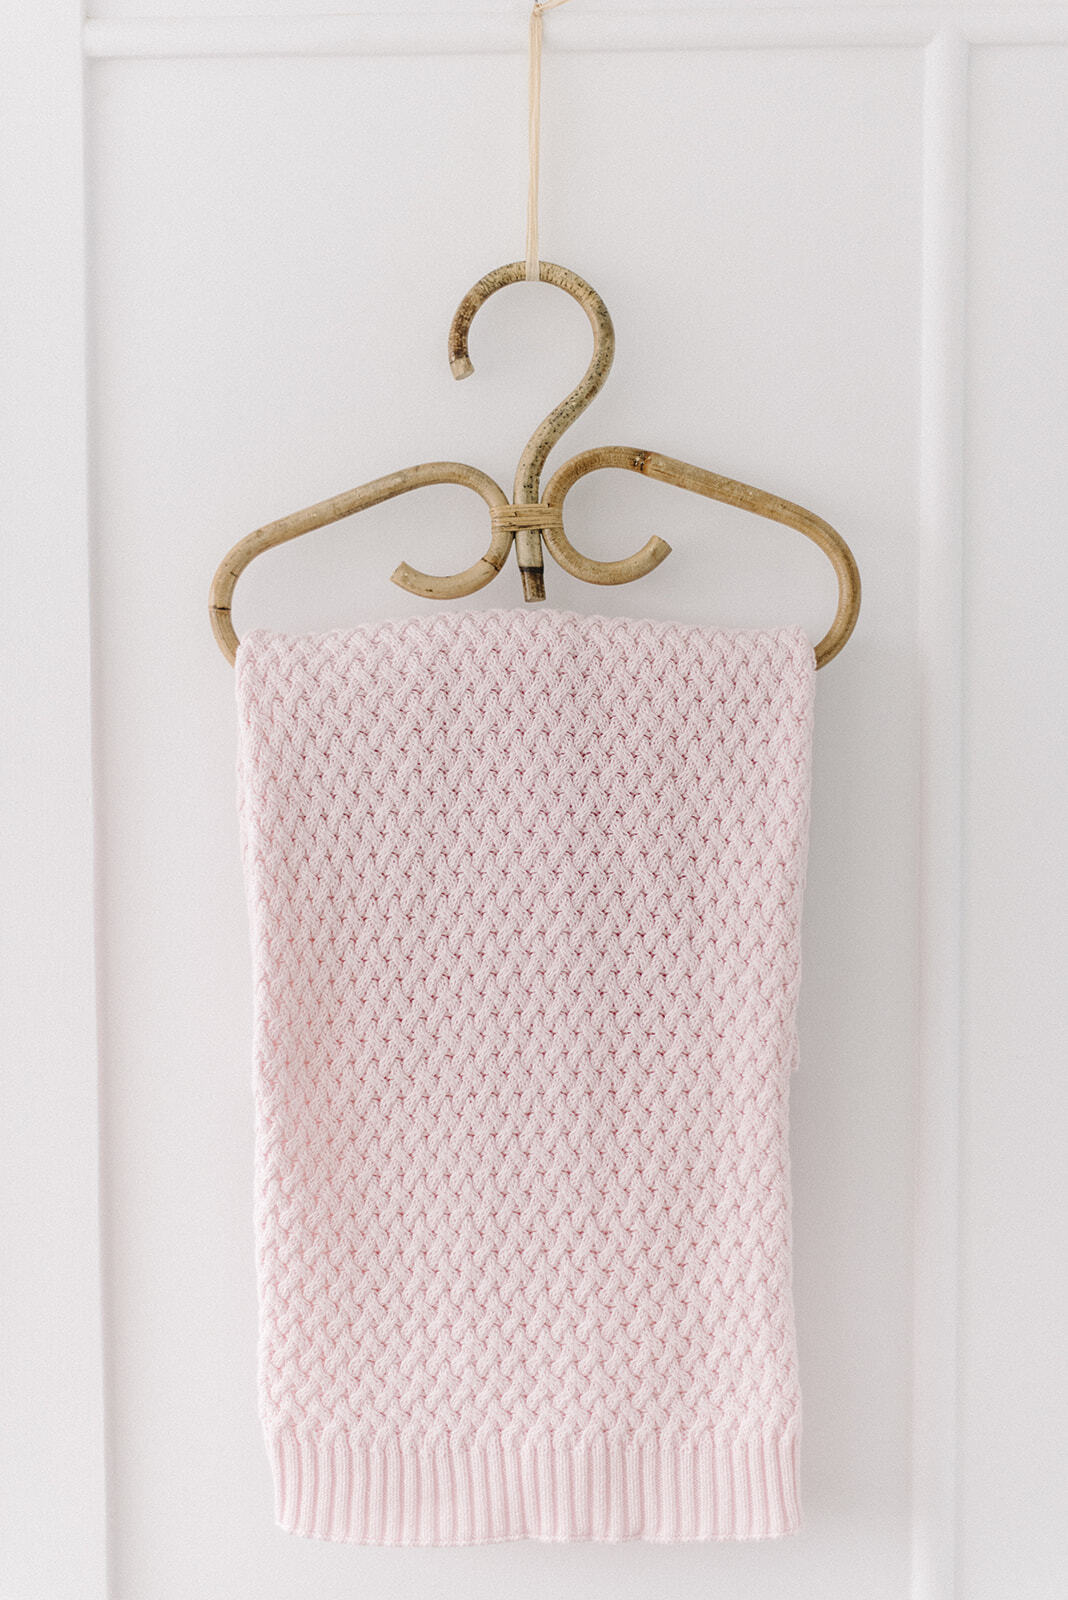 Blush Pink I Diamond Knit Baby Blanket